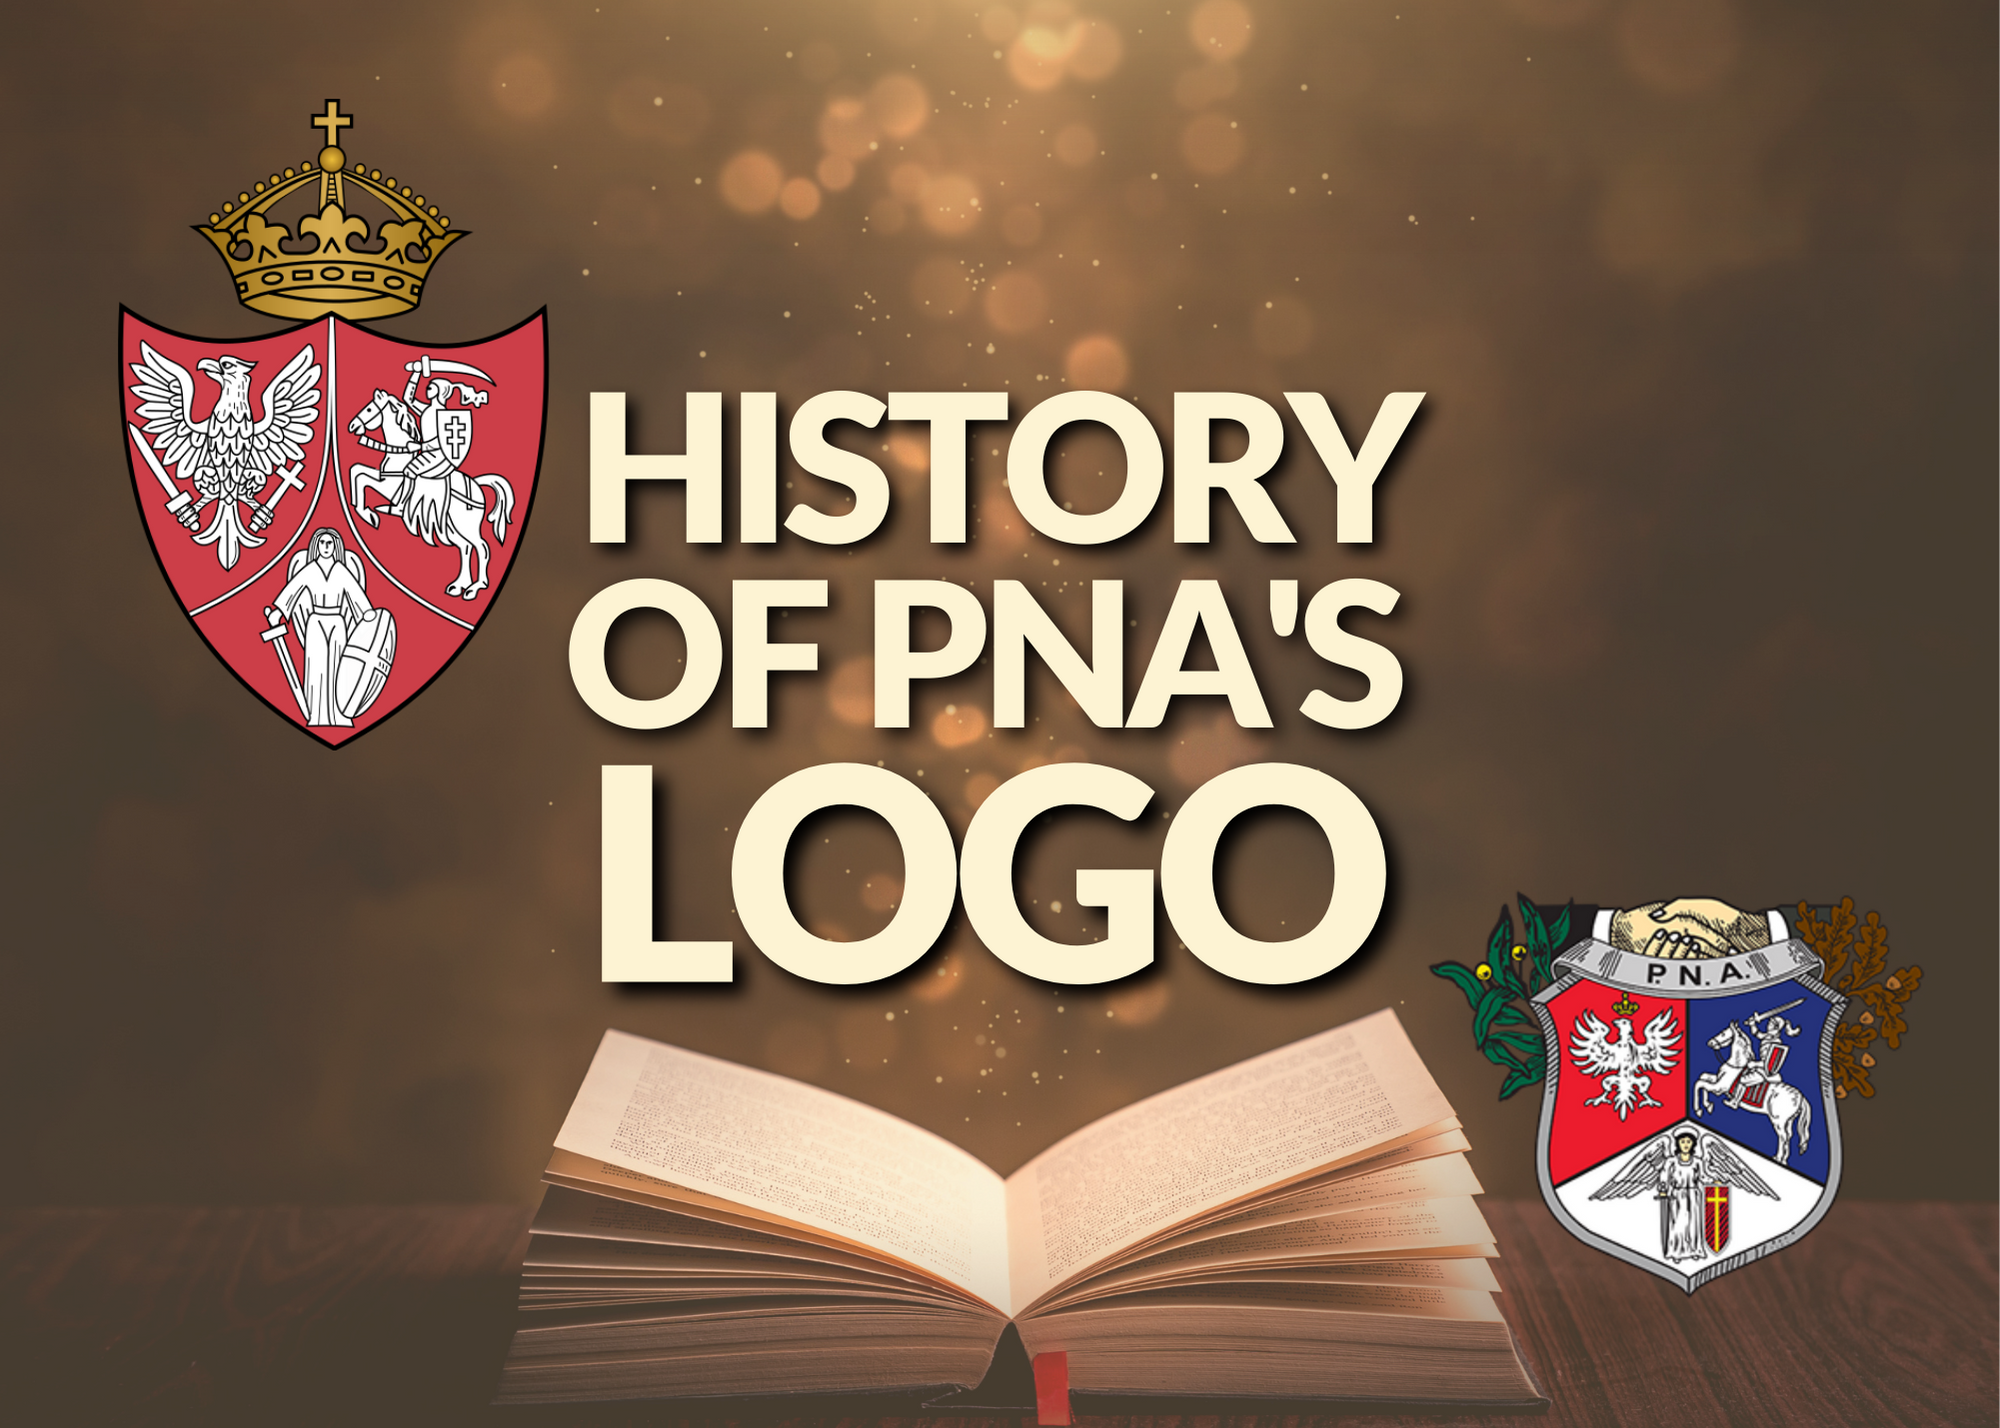 History of Polish National Alliance's logo